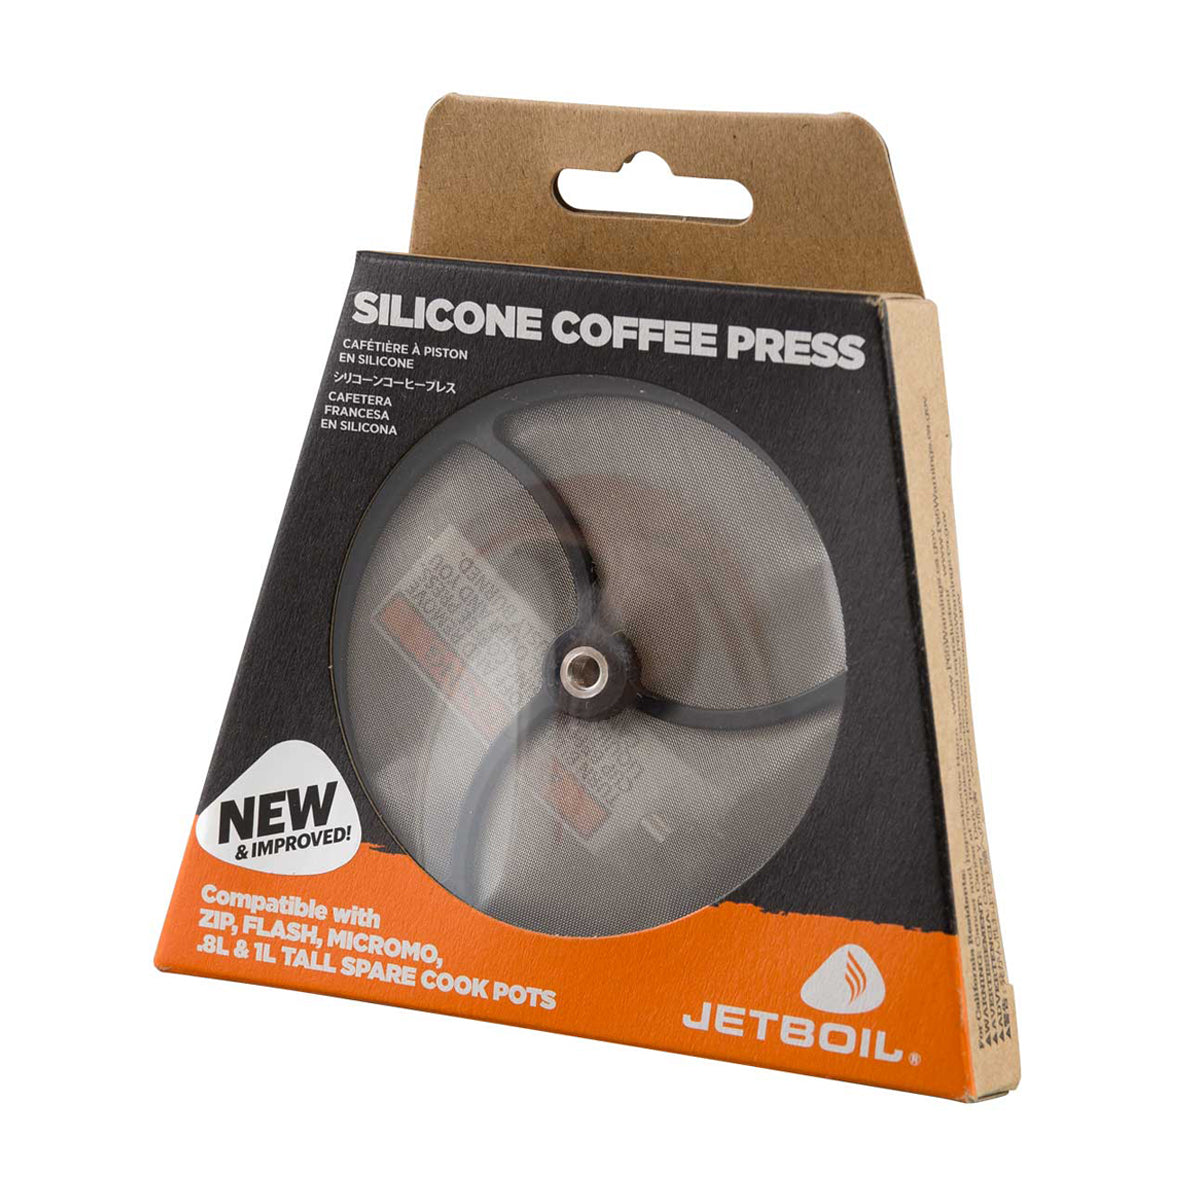 Jetboil Silicone Coffee Press